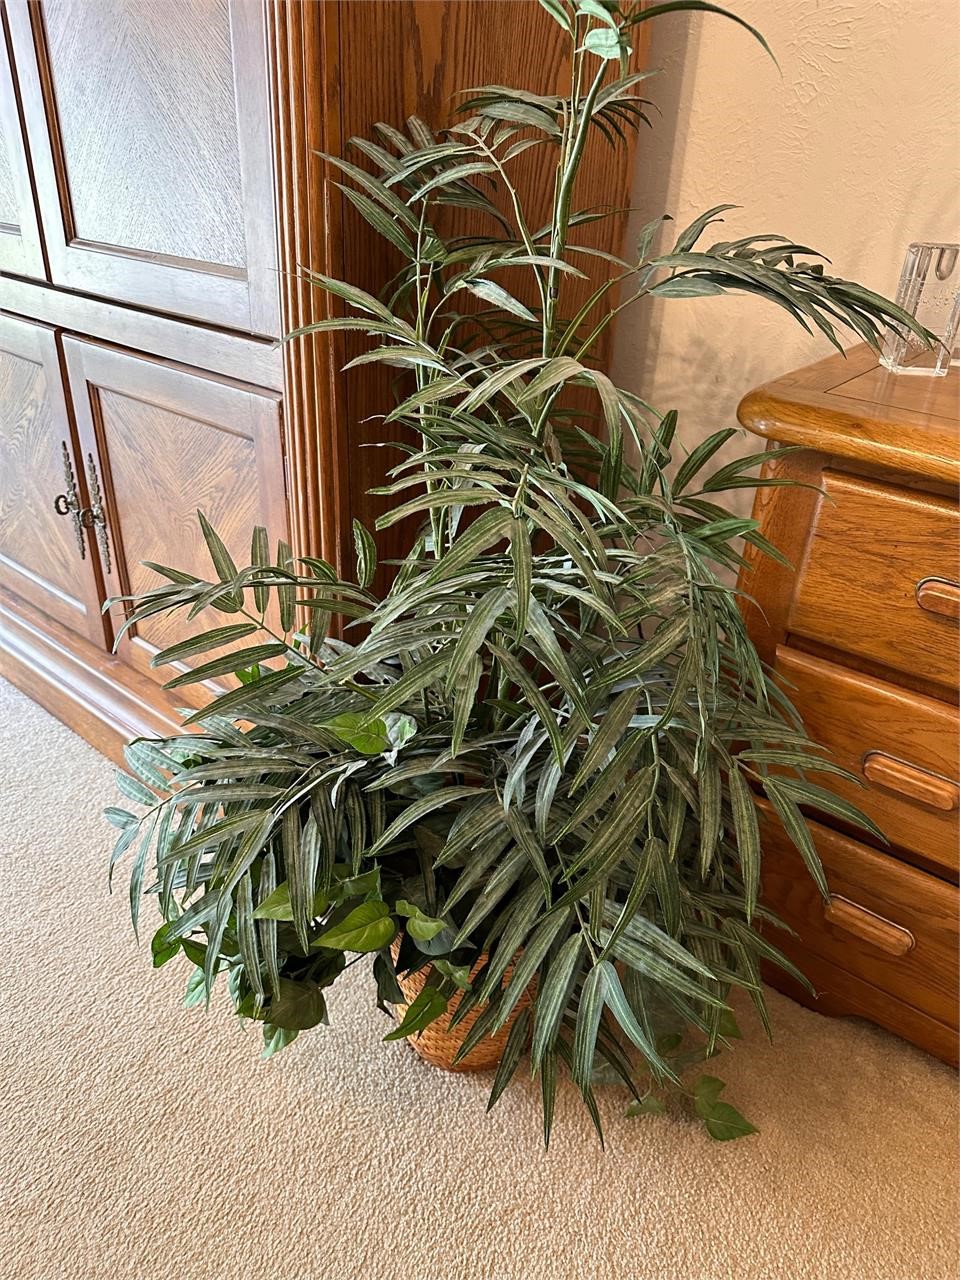 Large plant in basket